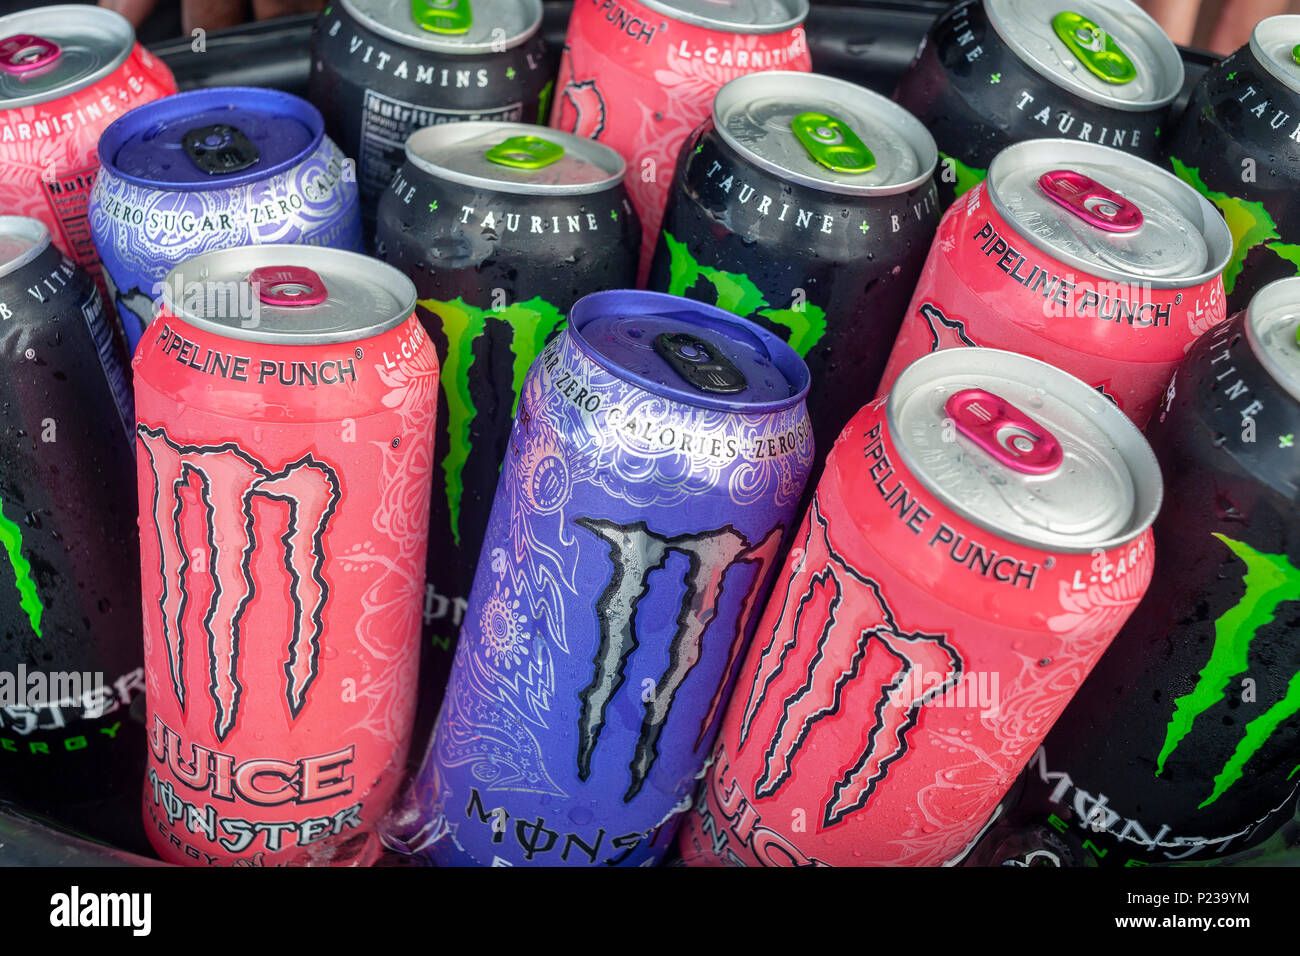 Monster Energy Named Official Energy Drink Partner of the New York Rangers  and Madison Square Garden